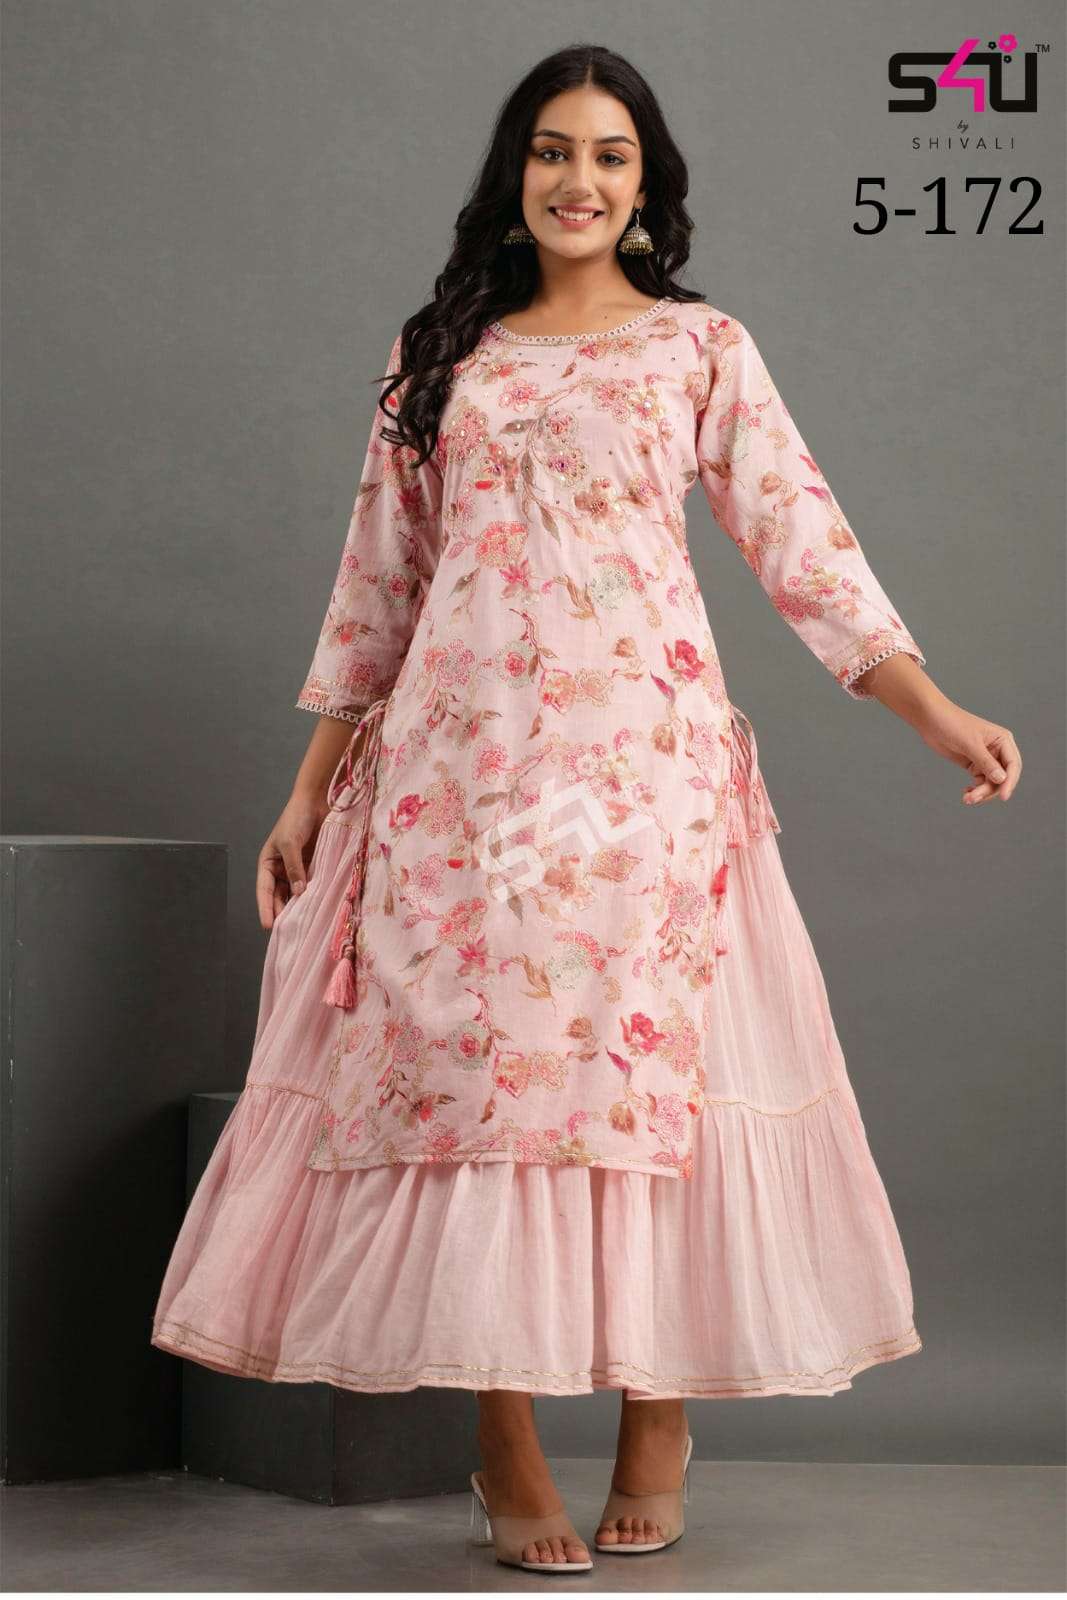 s4u shivali 5-172 design by s4u wedding wear designer gown kurti at wholesale price surat gujarat